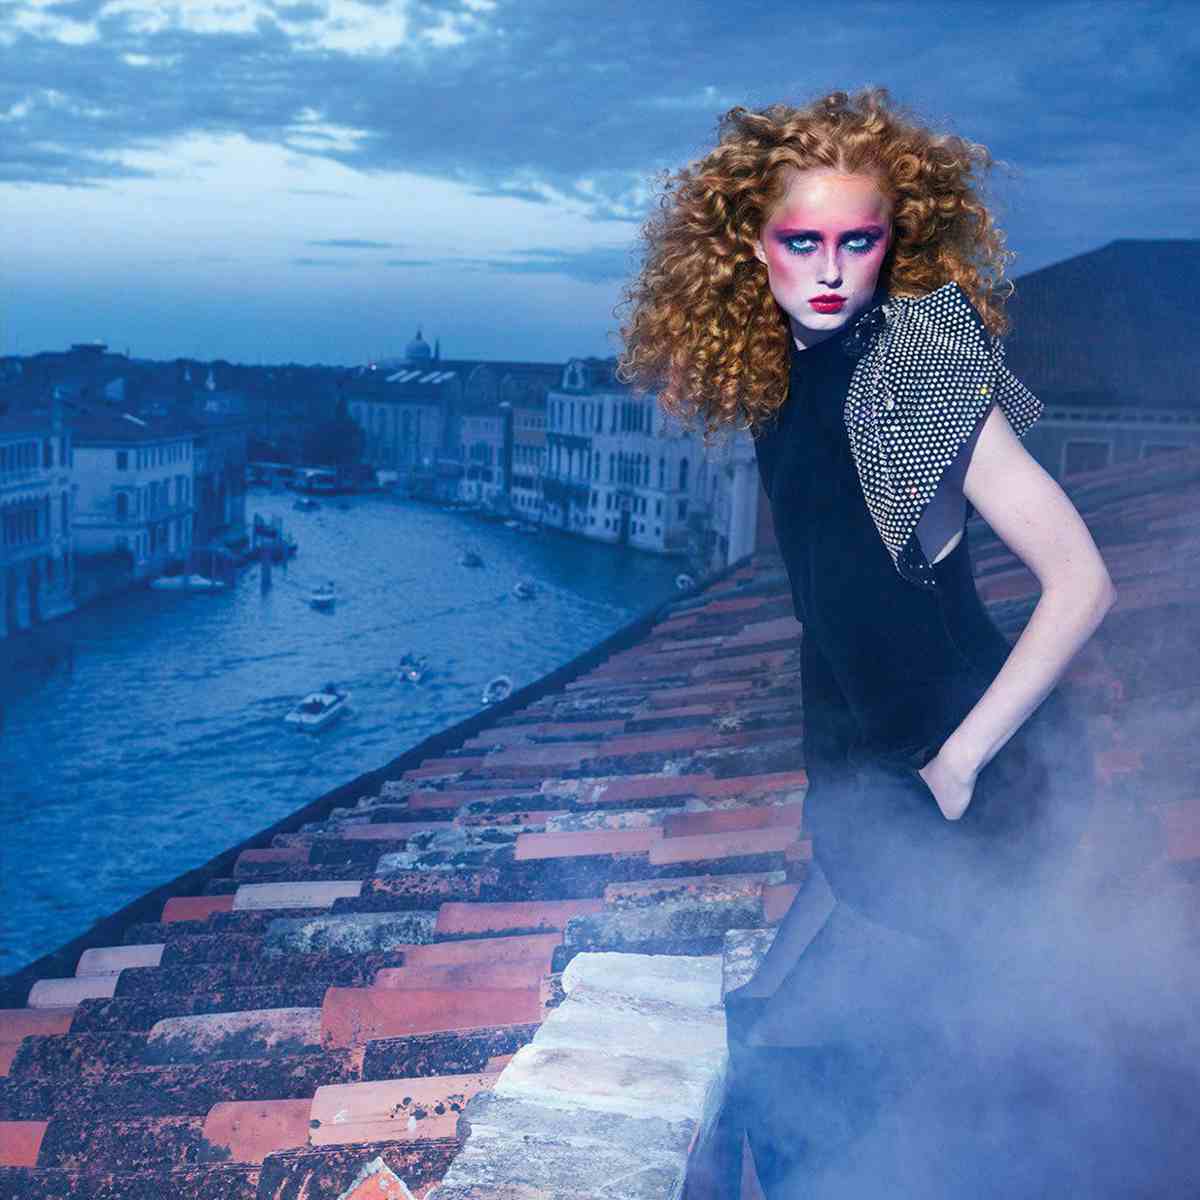 VOGUE PARIS - November 2017
Photographer: Inez & Vinoodh
Model: Anja Rubik, Rianne Von Rompey, Anna Ewers
Location: Venice, Italy